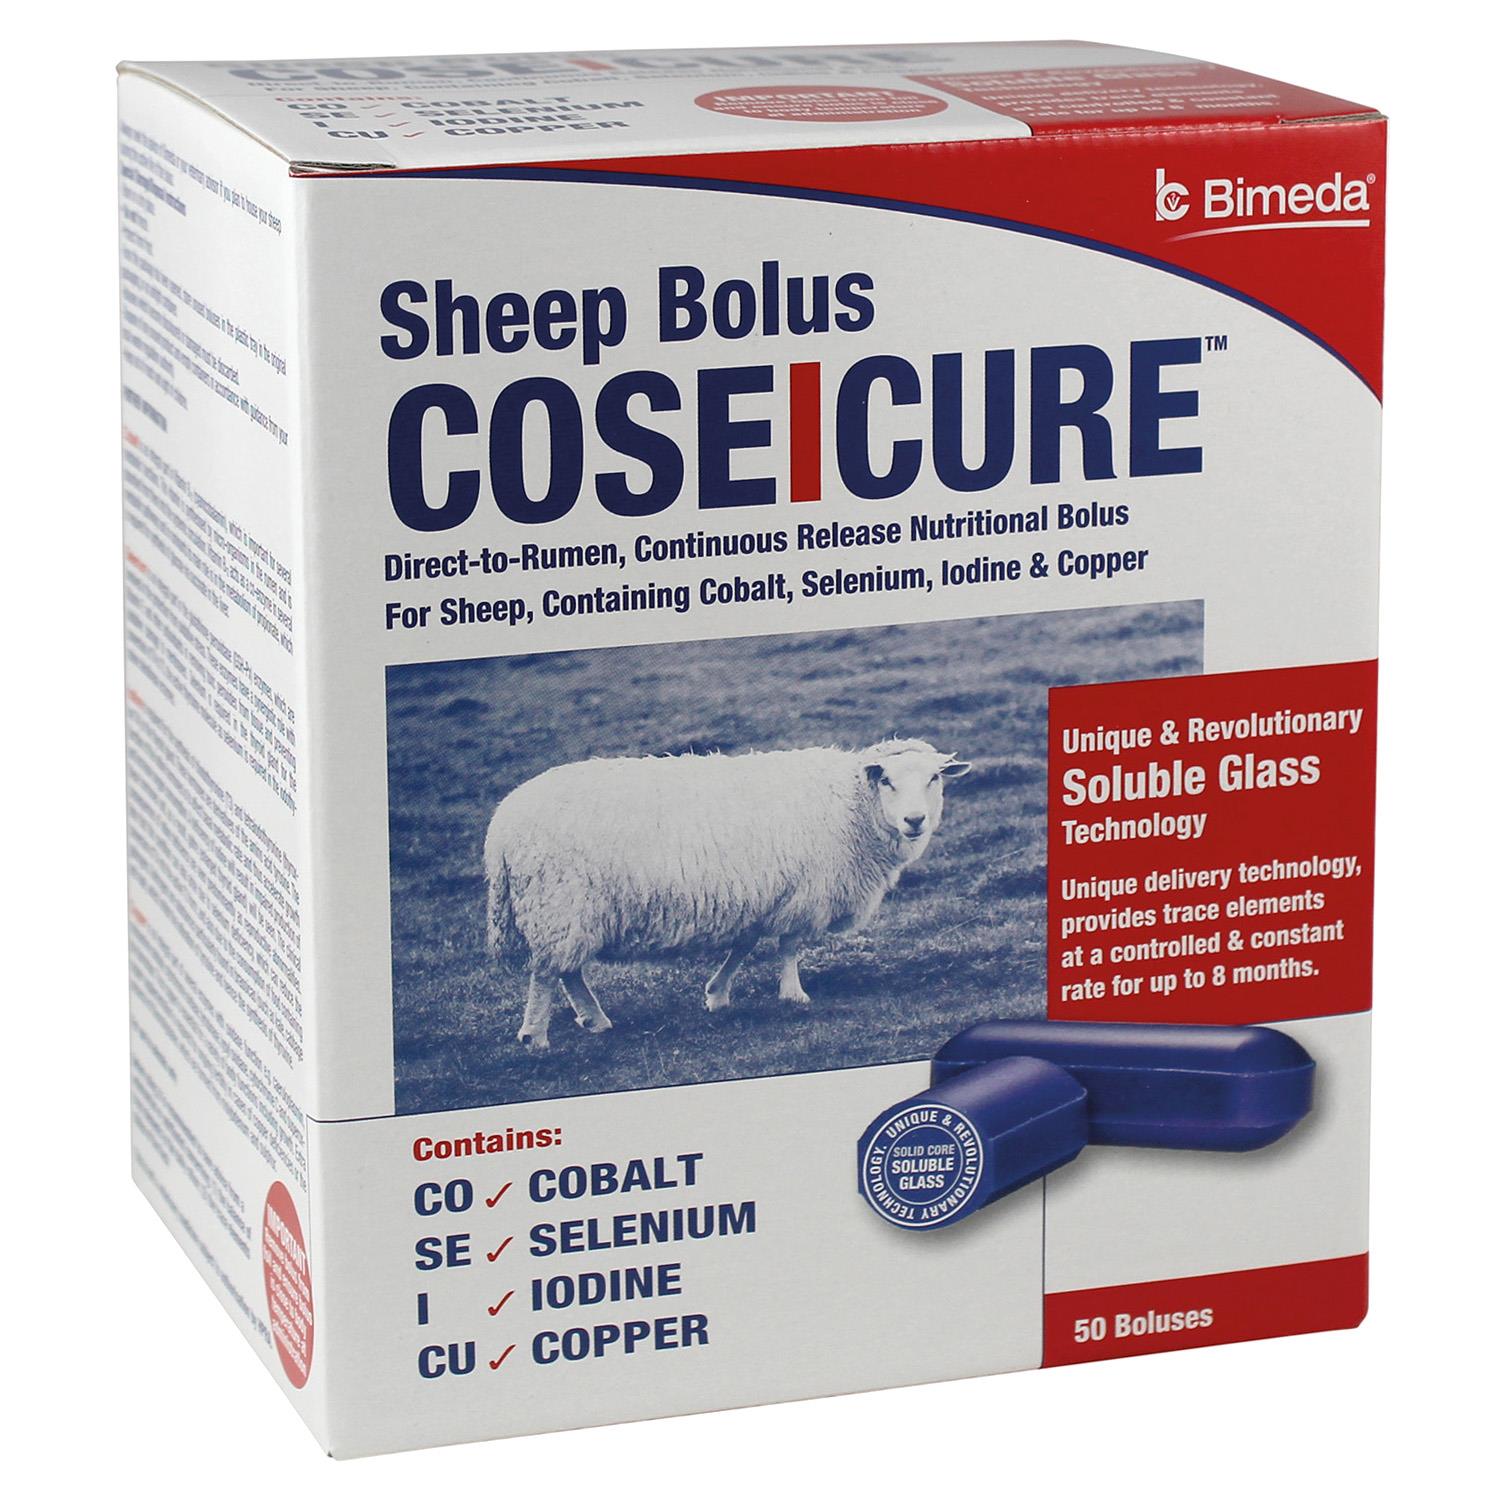 Bimeda Coseicure Sheep Bolus - Just Horse Riders